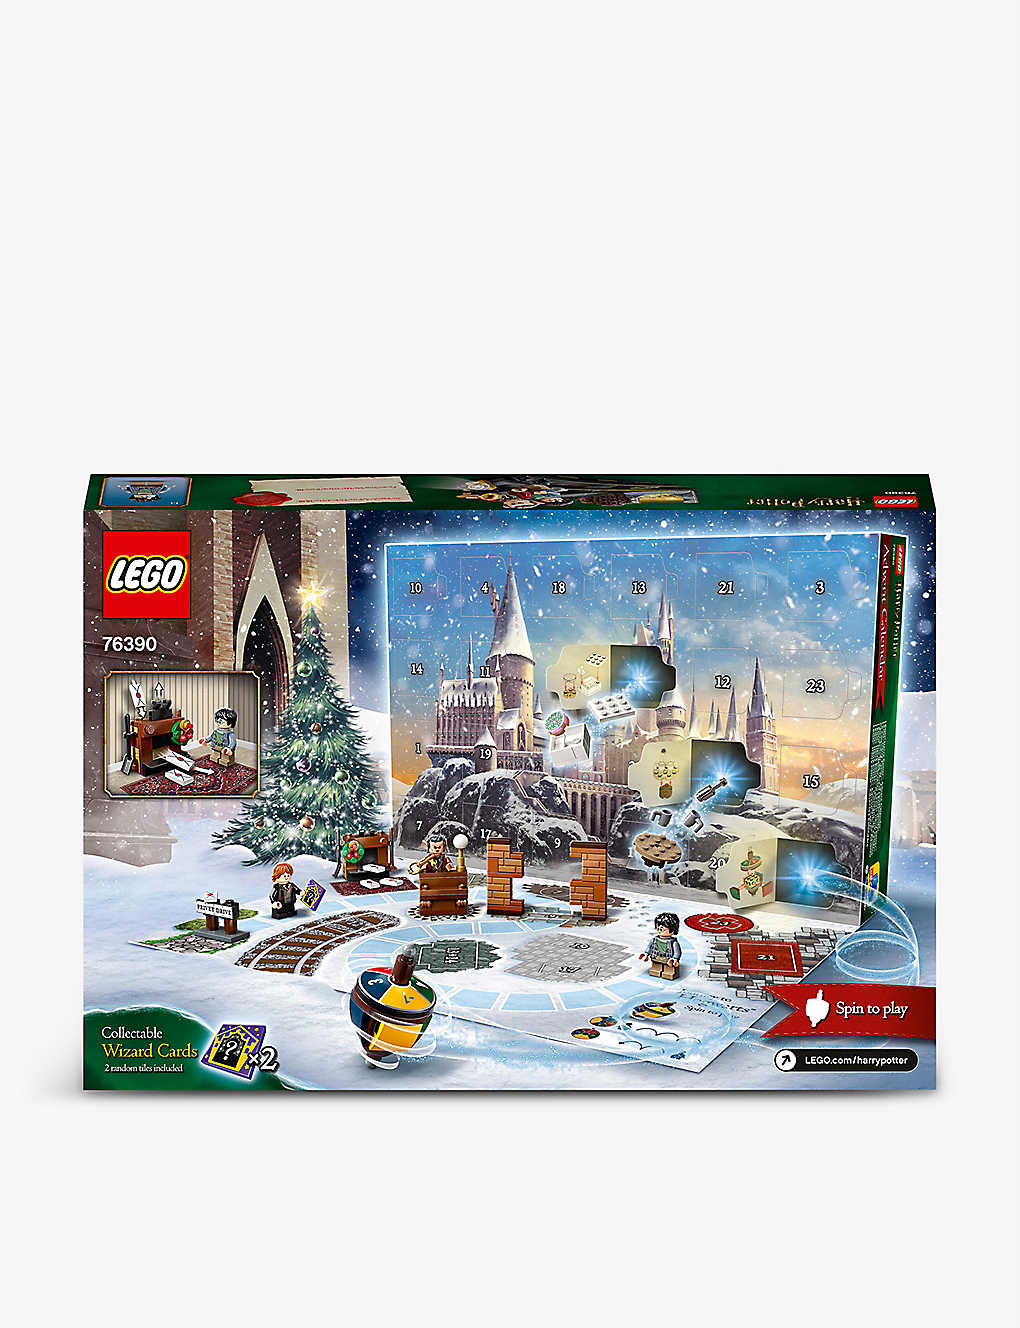 Harry Potter Lego Advent Calendar